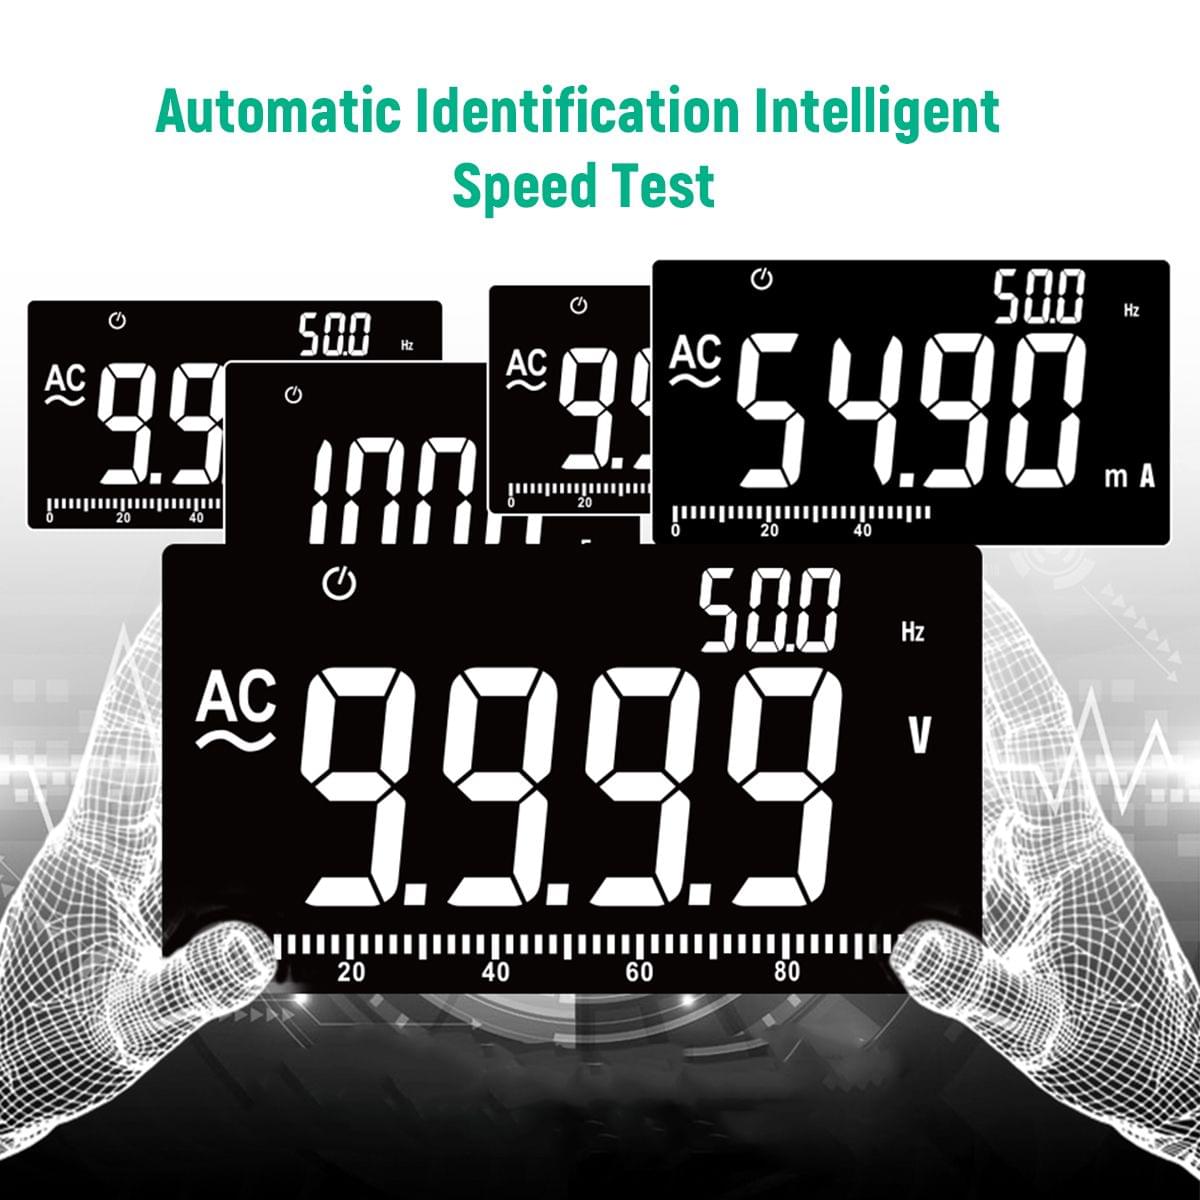 FUYI Digital Multimeter 9999 Count Intelligent Automatic